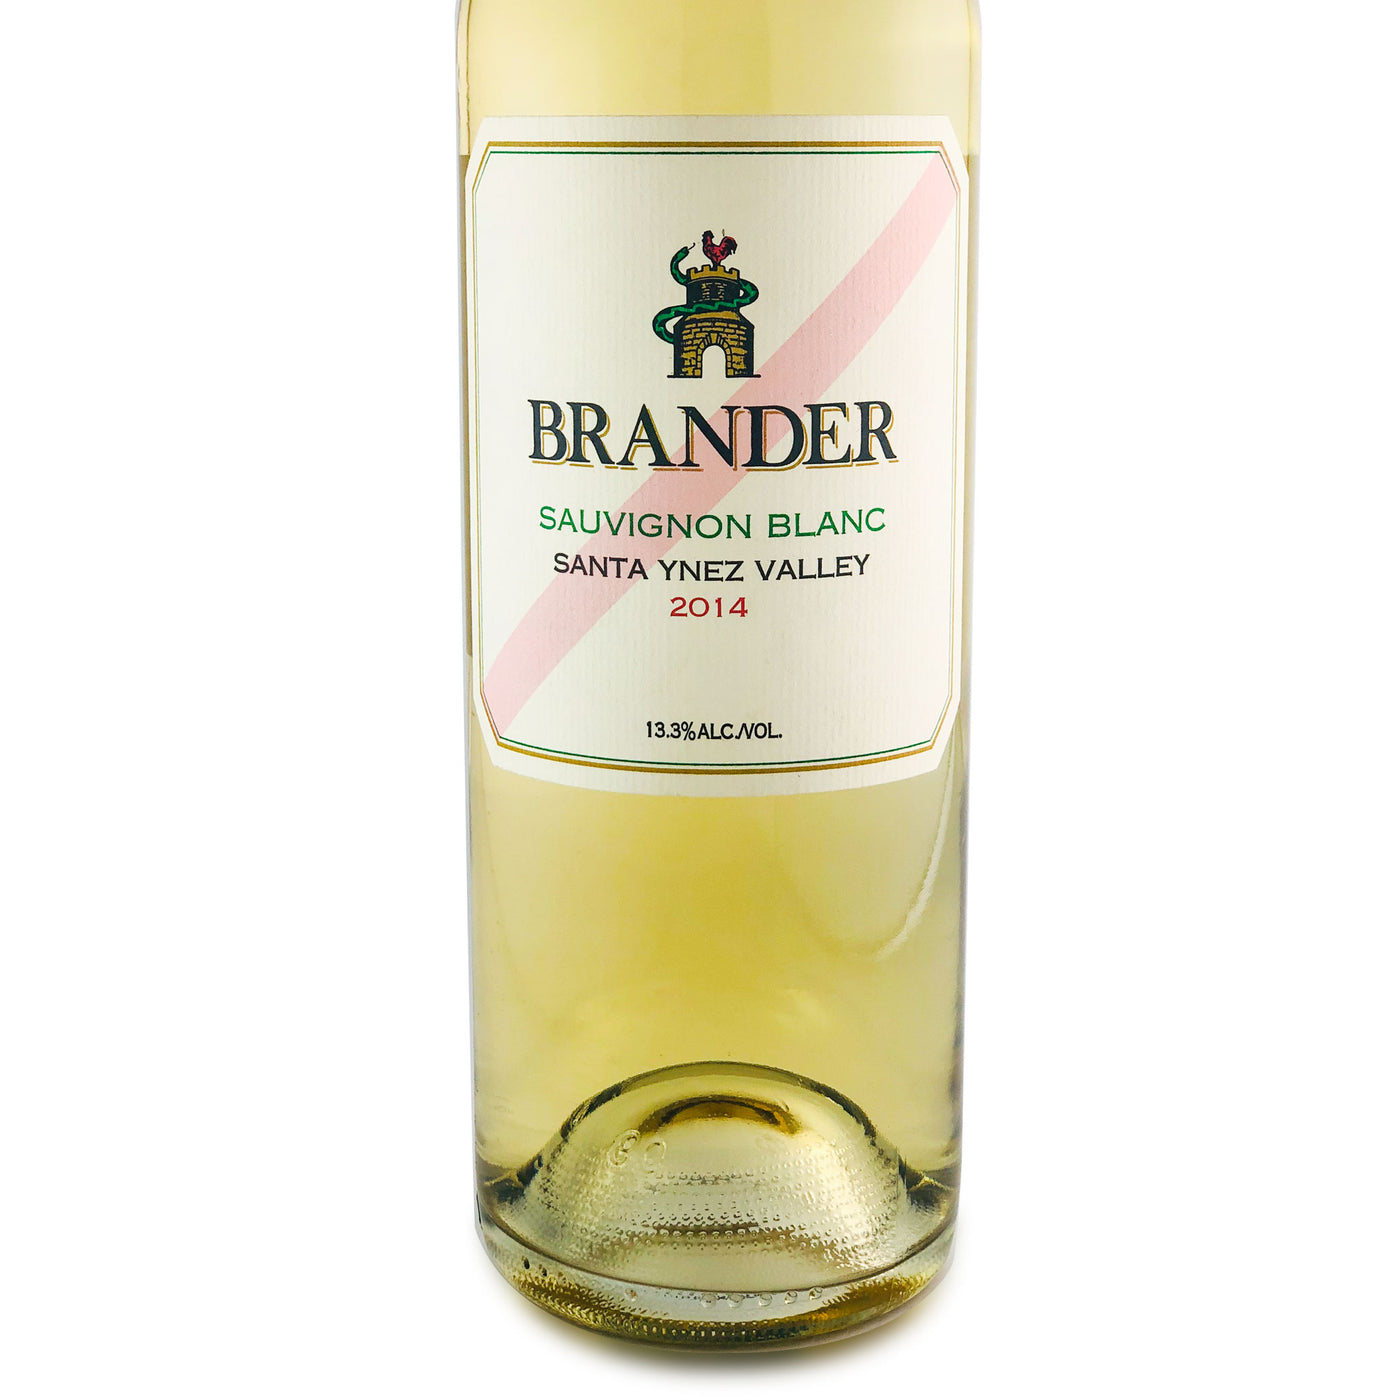 Brander Sauvignon Blanc 2014